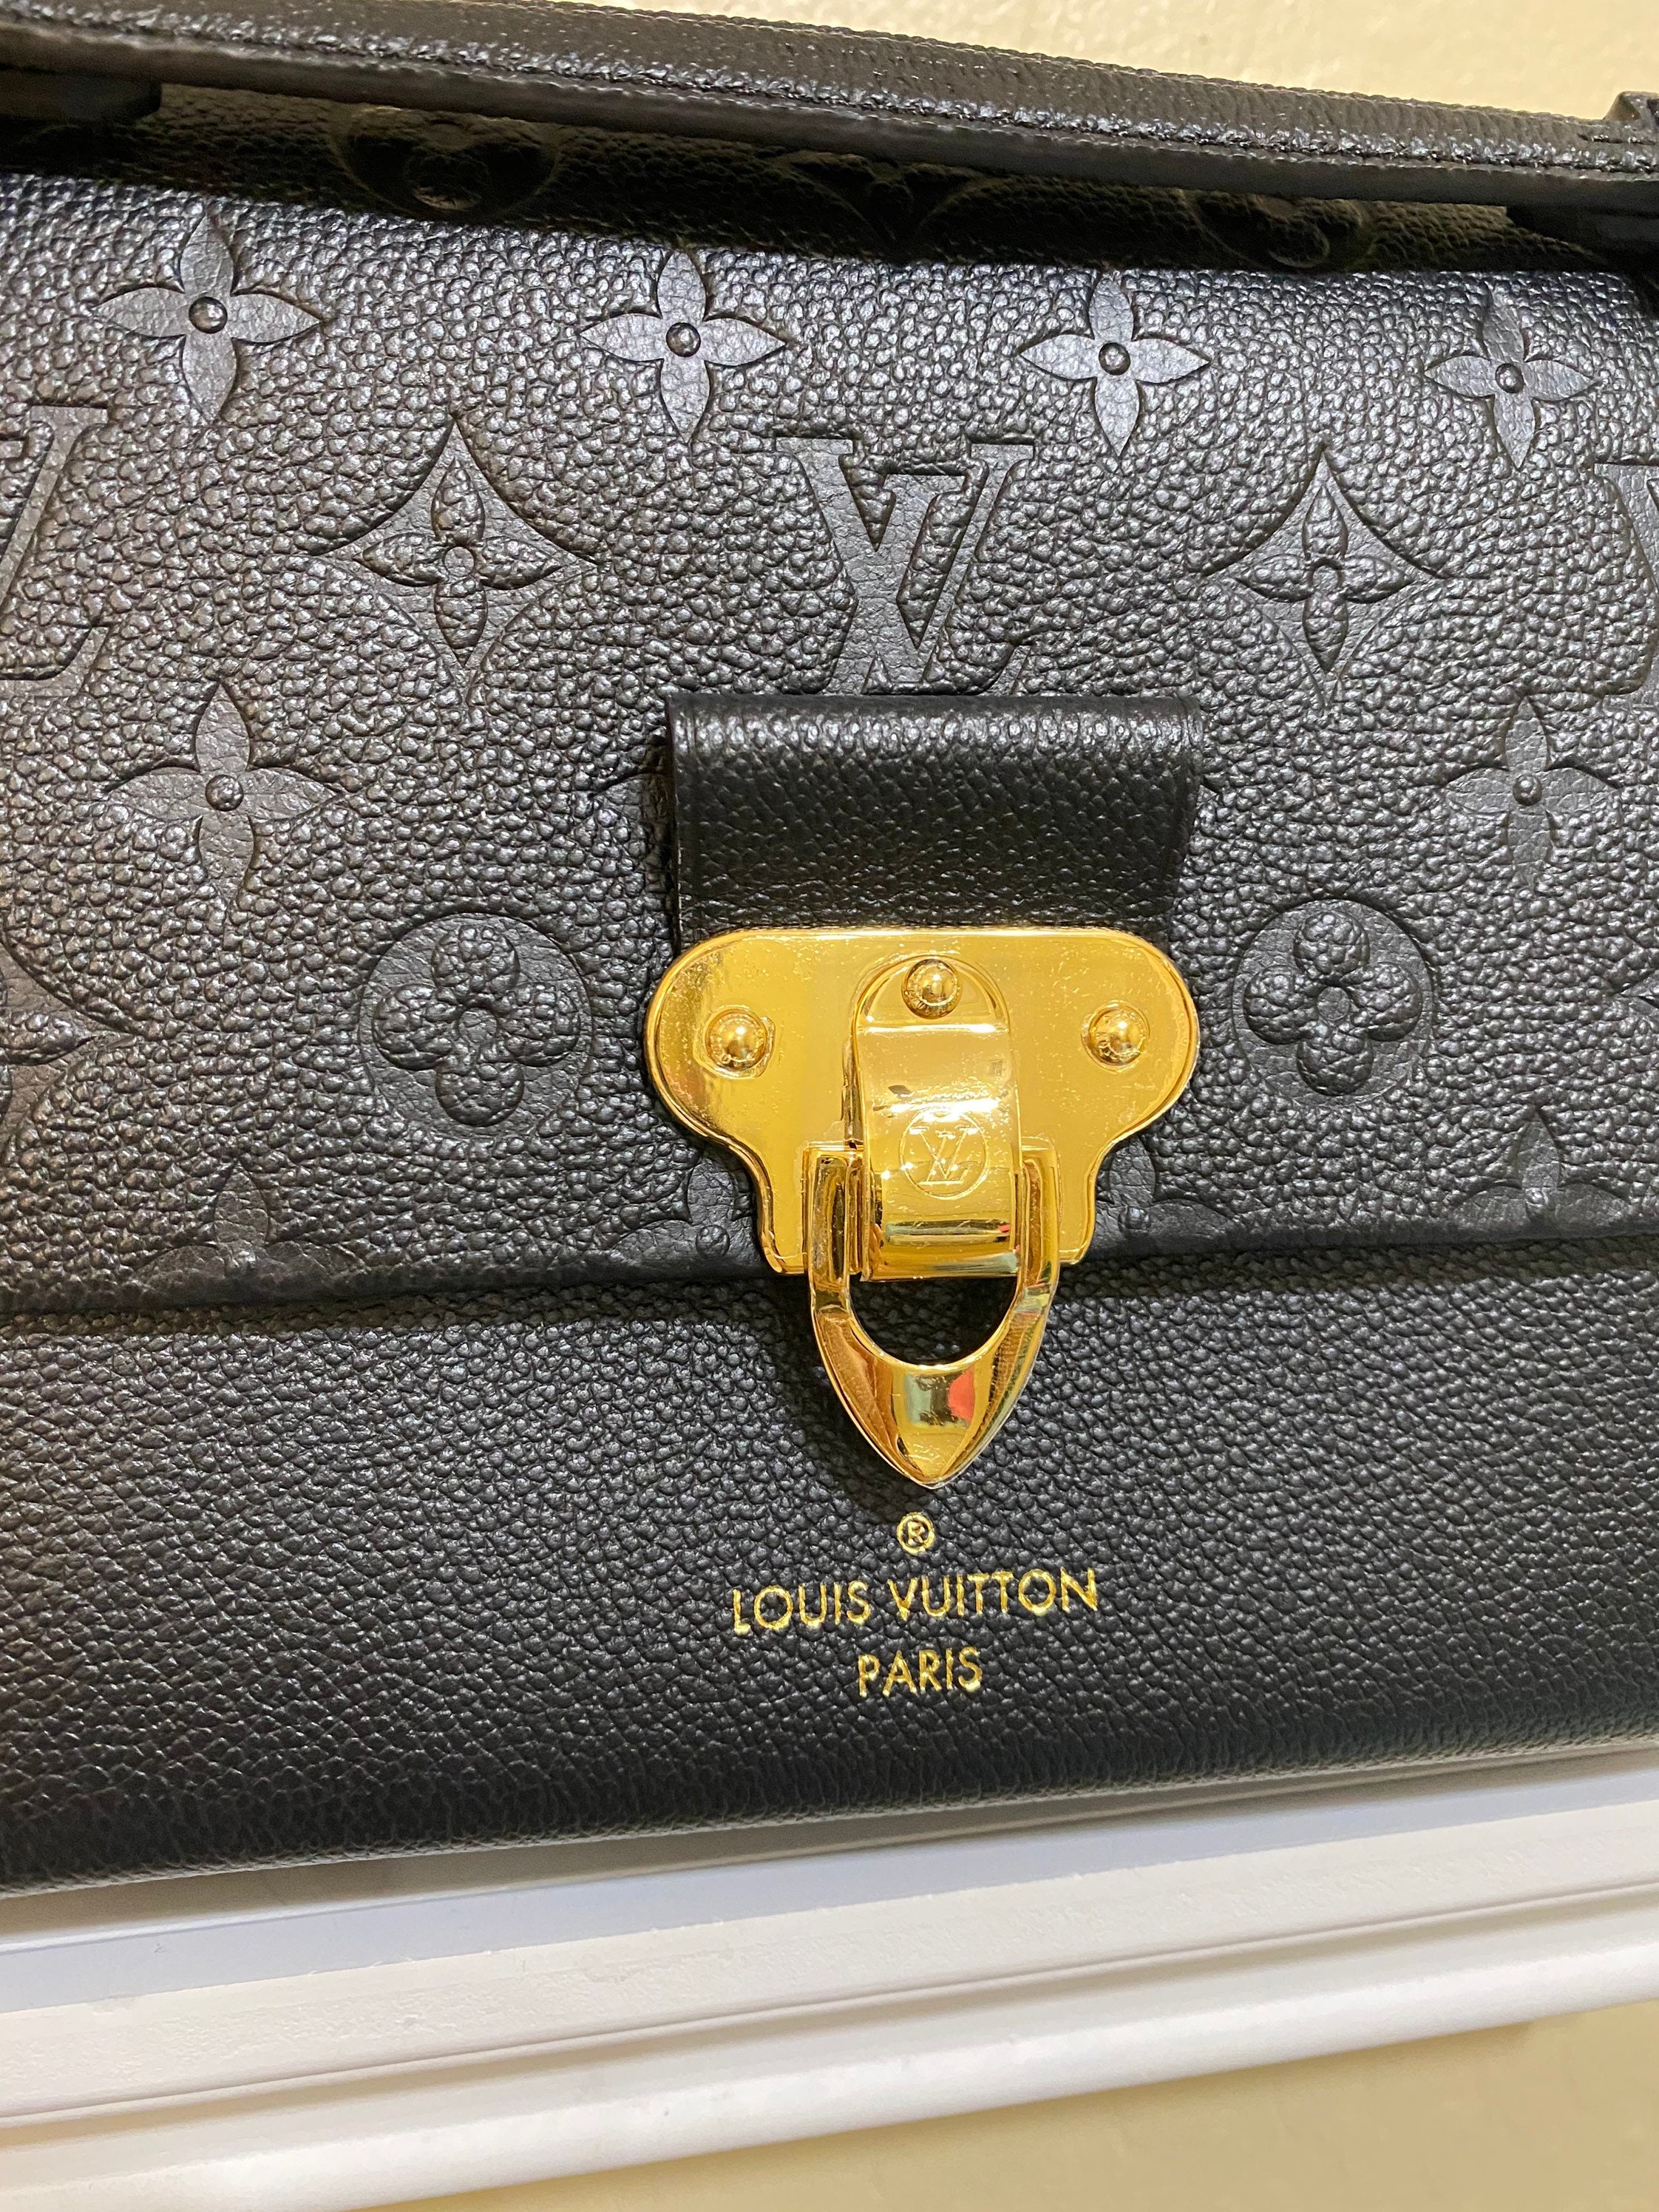 Buy Black Louis Vuitton Bag Online In India -  India